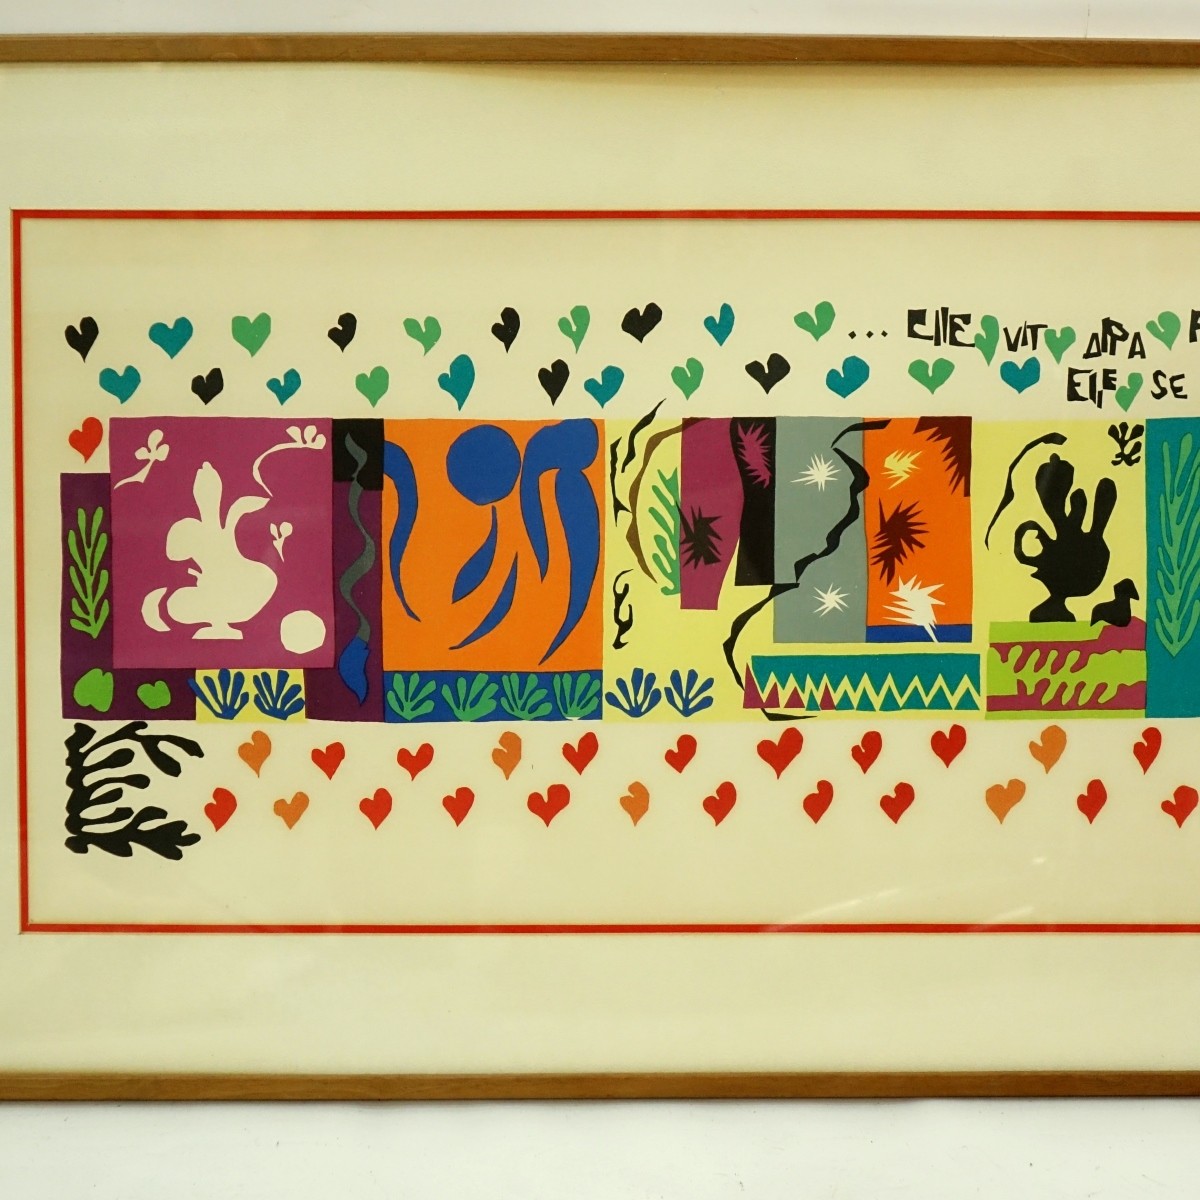 Henri Matisse, French (1869 - 1954) Lithograph "A